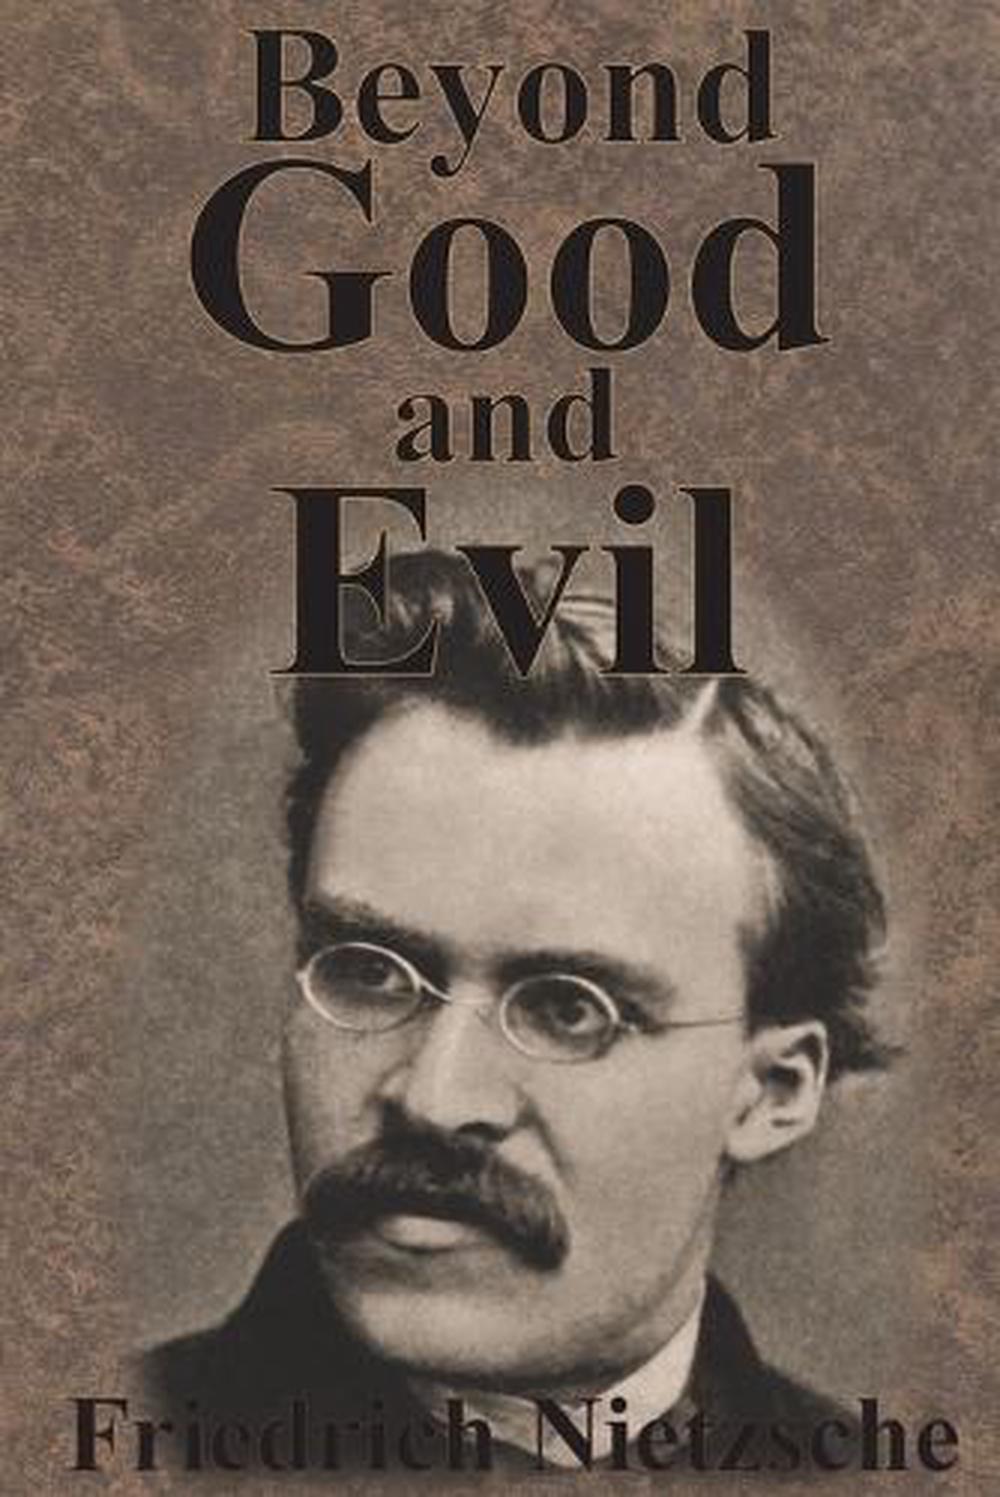 nietzsche first essay good and evil summary